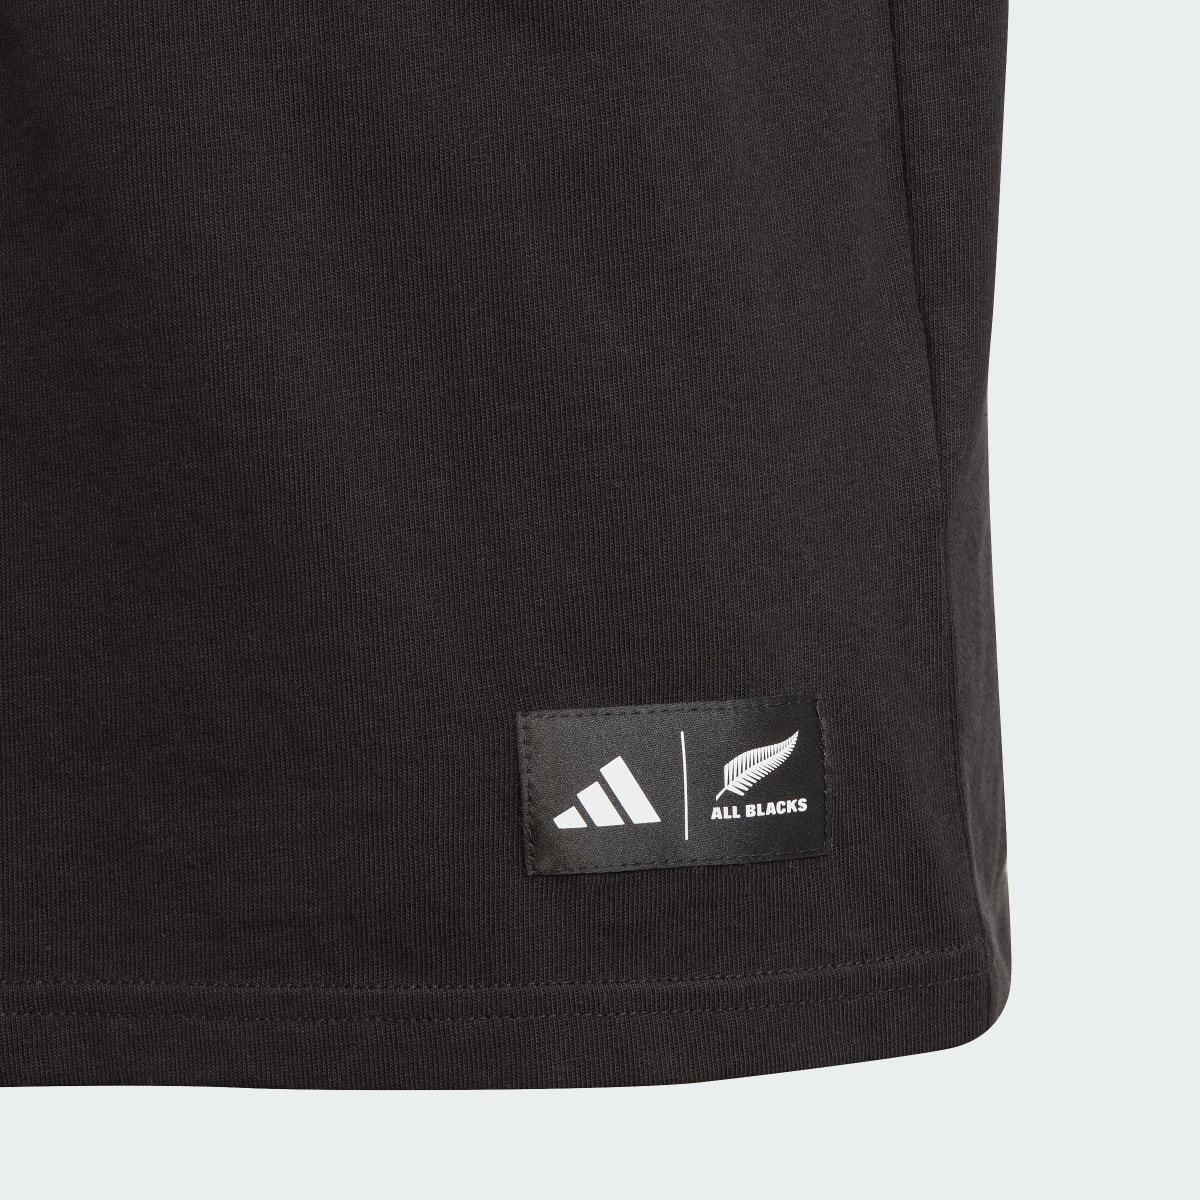 Adidas All Blacks Graphic Tee. 4